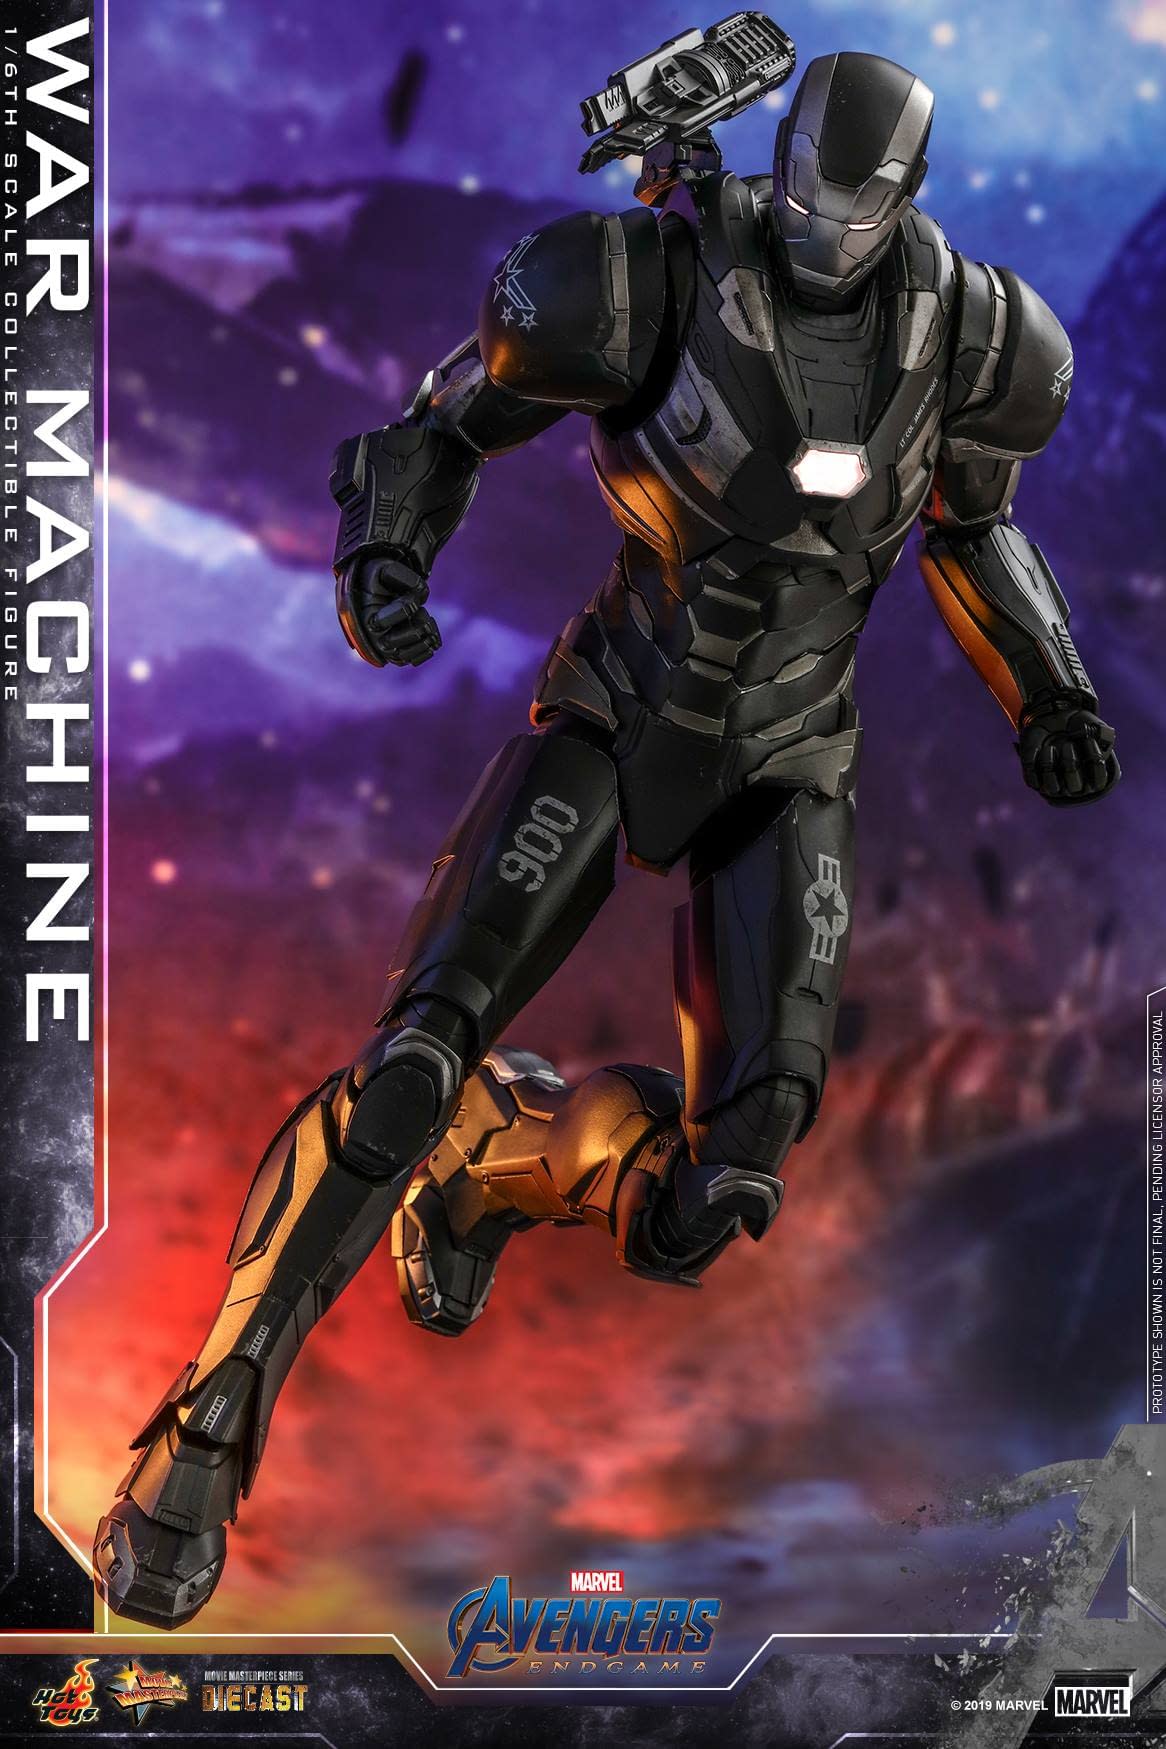 Hot Toys Reveals Hawkeye/Ronin and War Machine Avengers: Endgame Figures